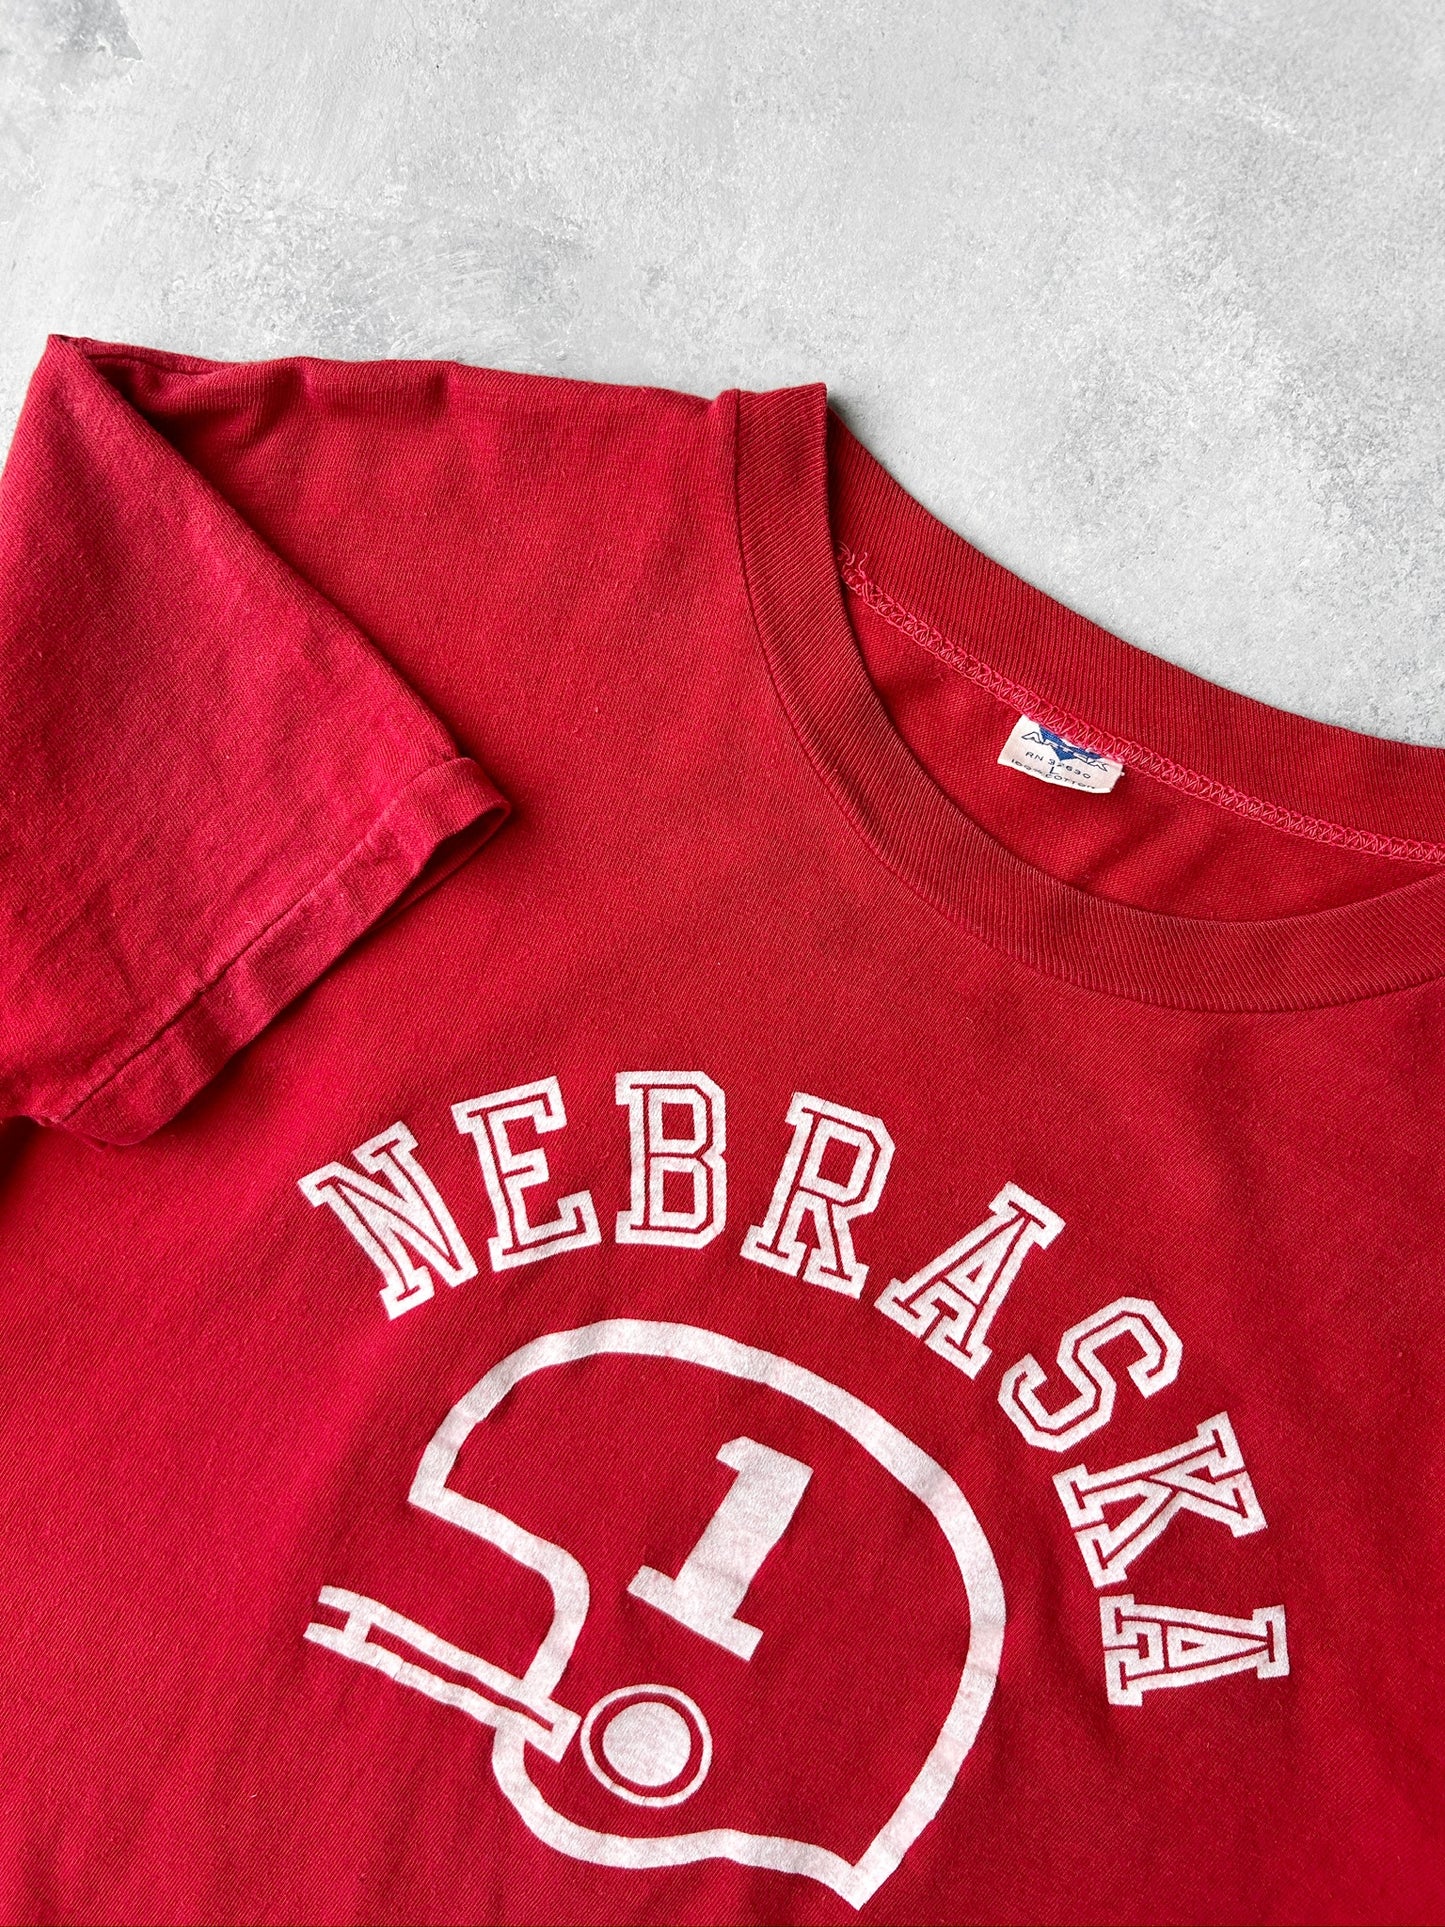 University of Nebraska T-Shirt 70's - Medium